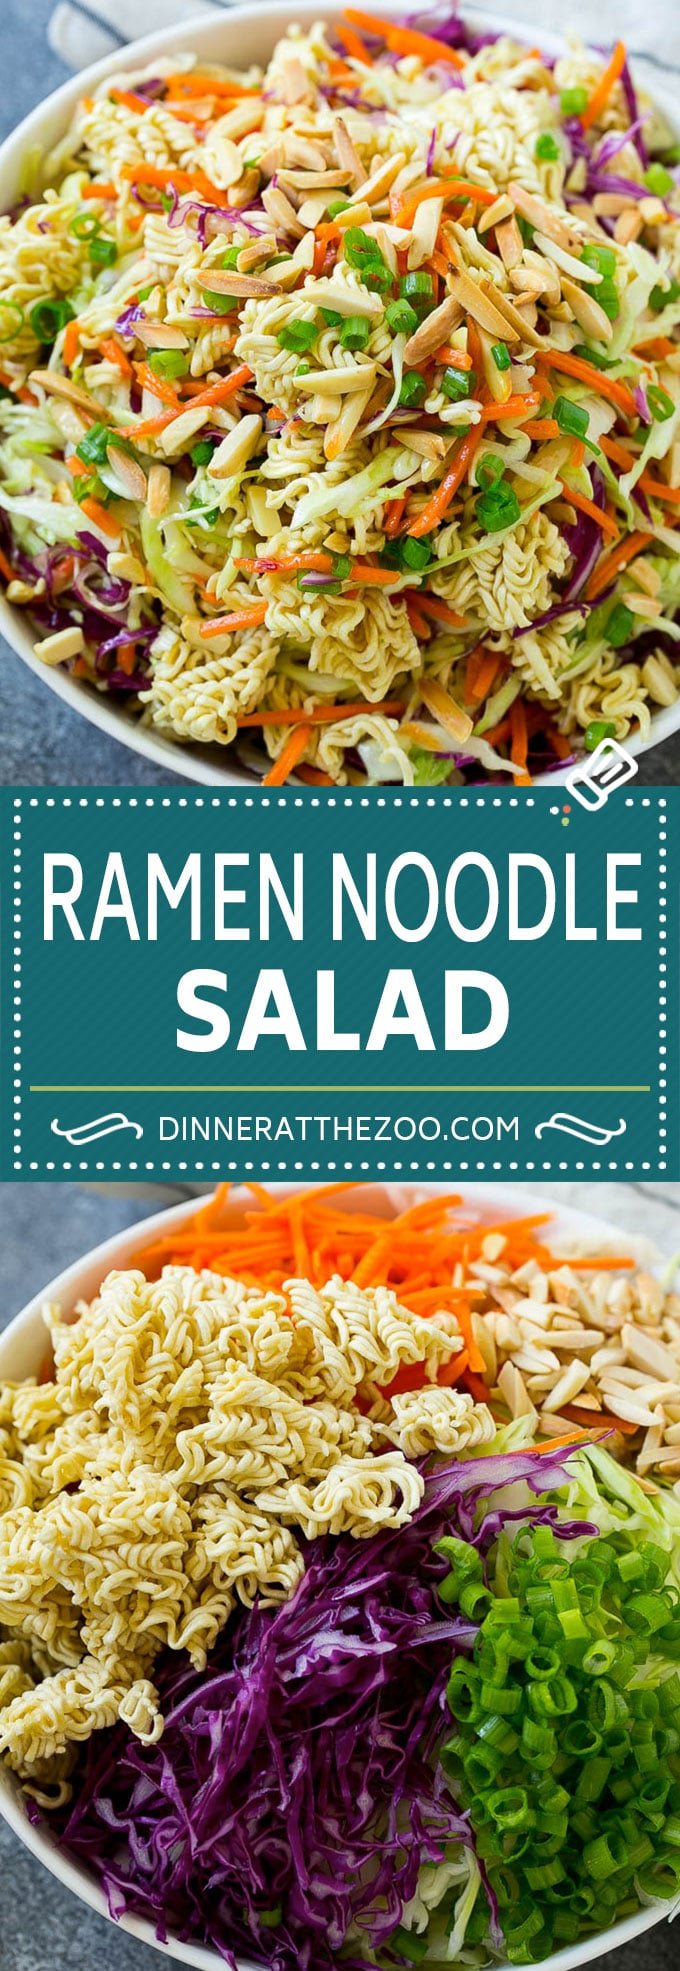 Ramen Noodle Salad Recipe | Oriental Salad | Asian Salad | Ramen Noodle Cabbage Salad #ramennoodles #salad #cabbagesalad #salad #dinneratthezoo